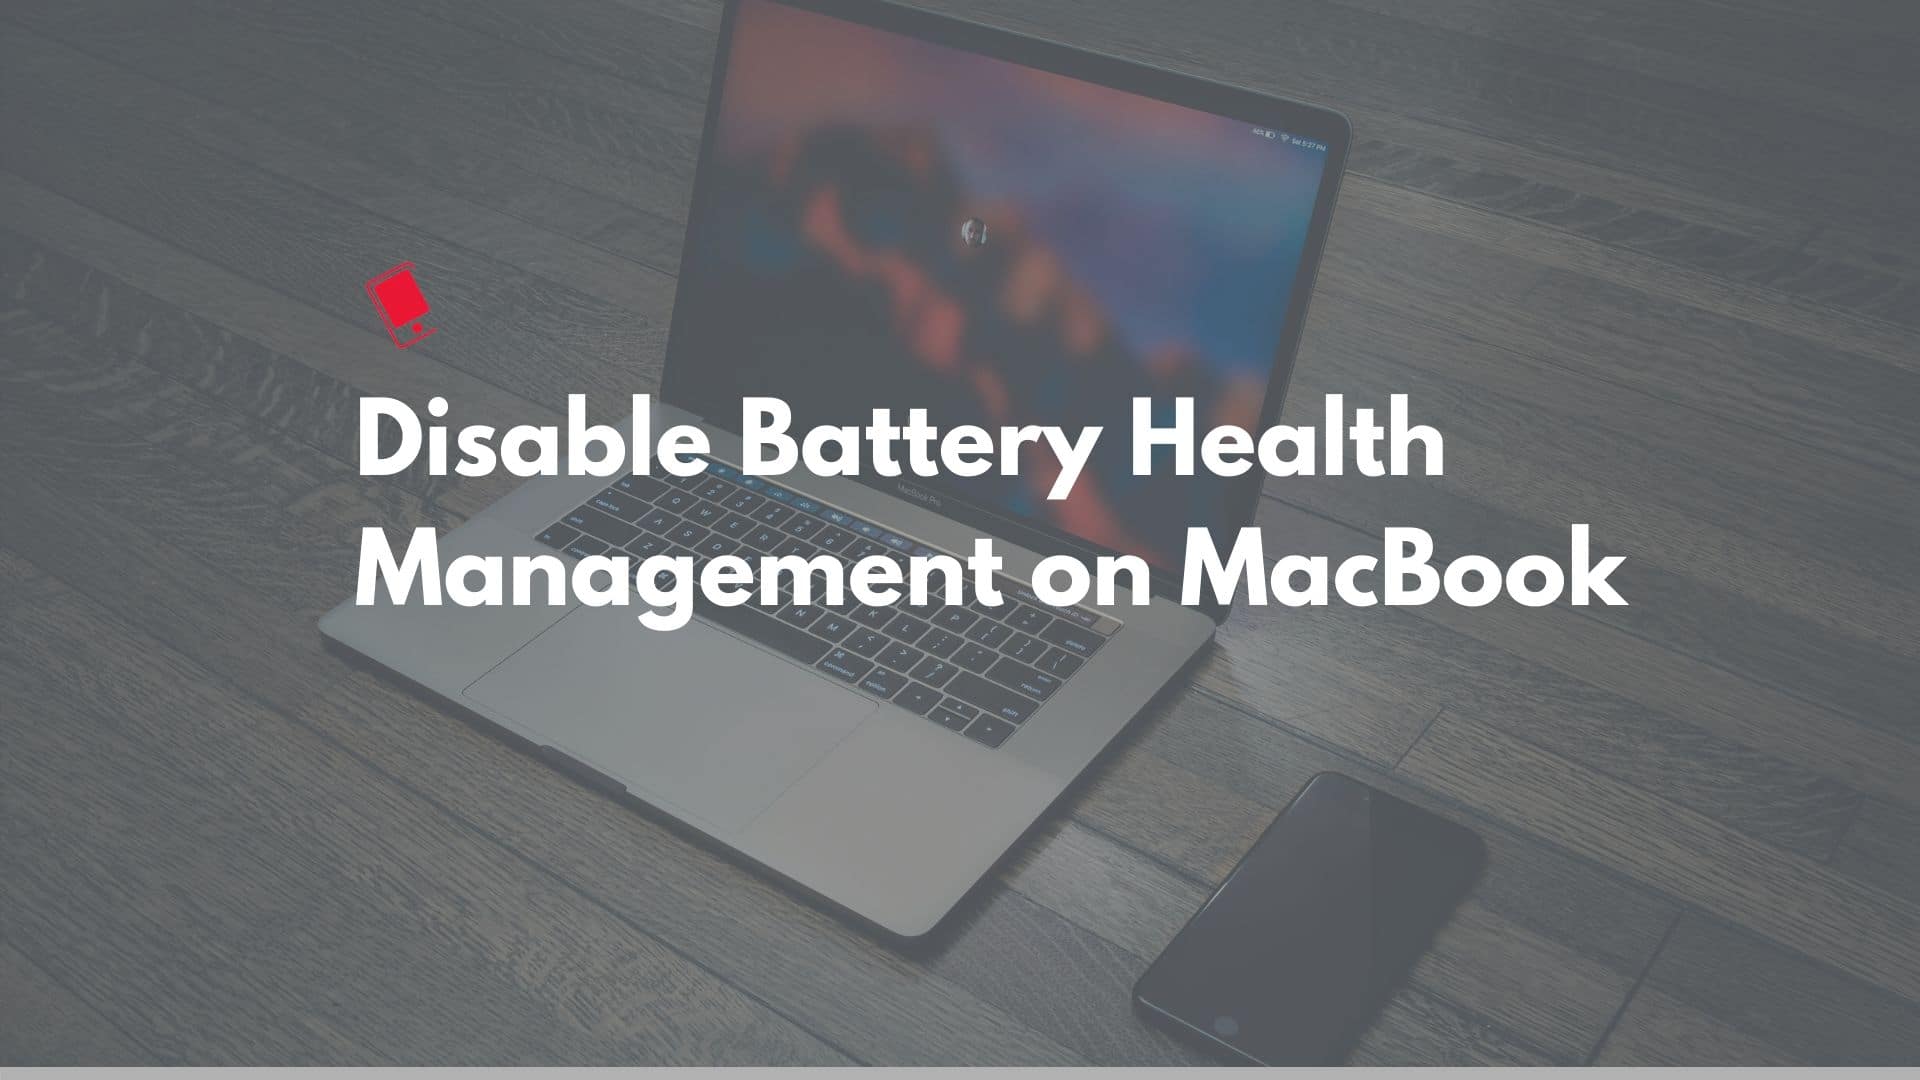 MacBook Disable Battery Health Management